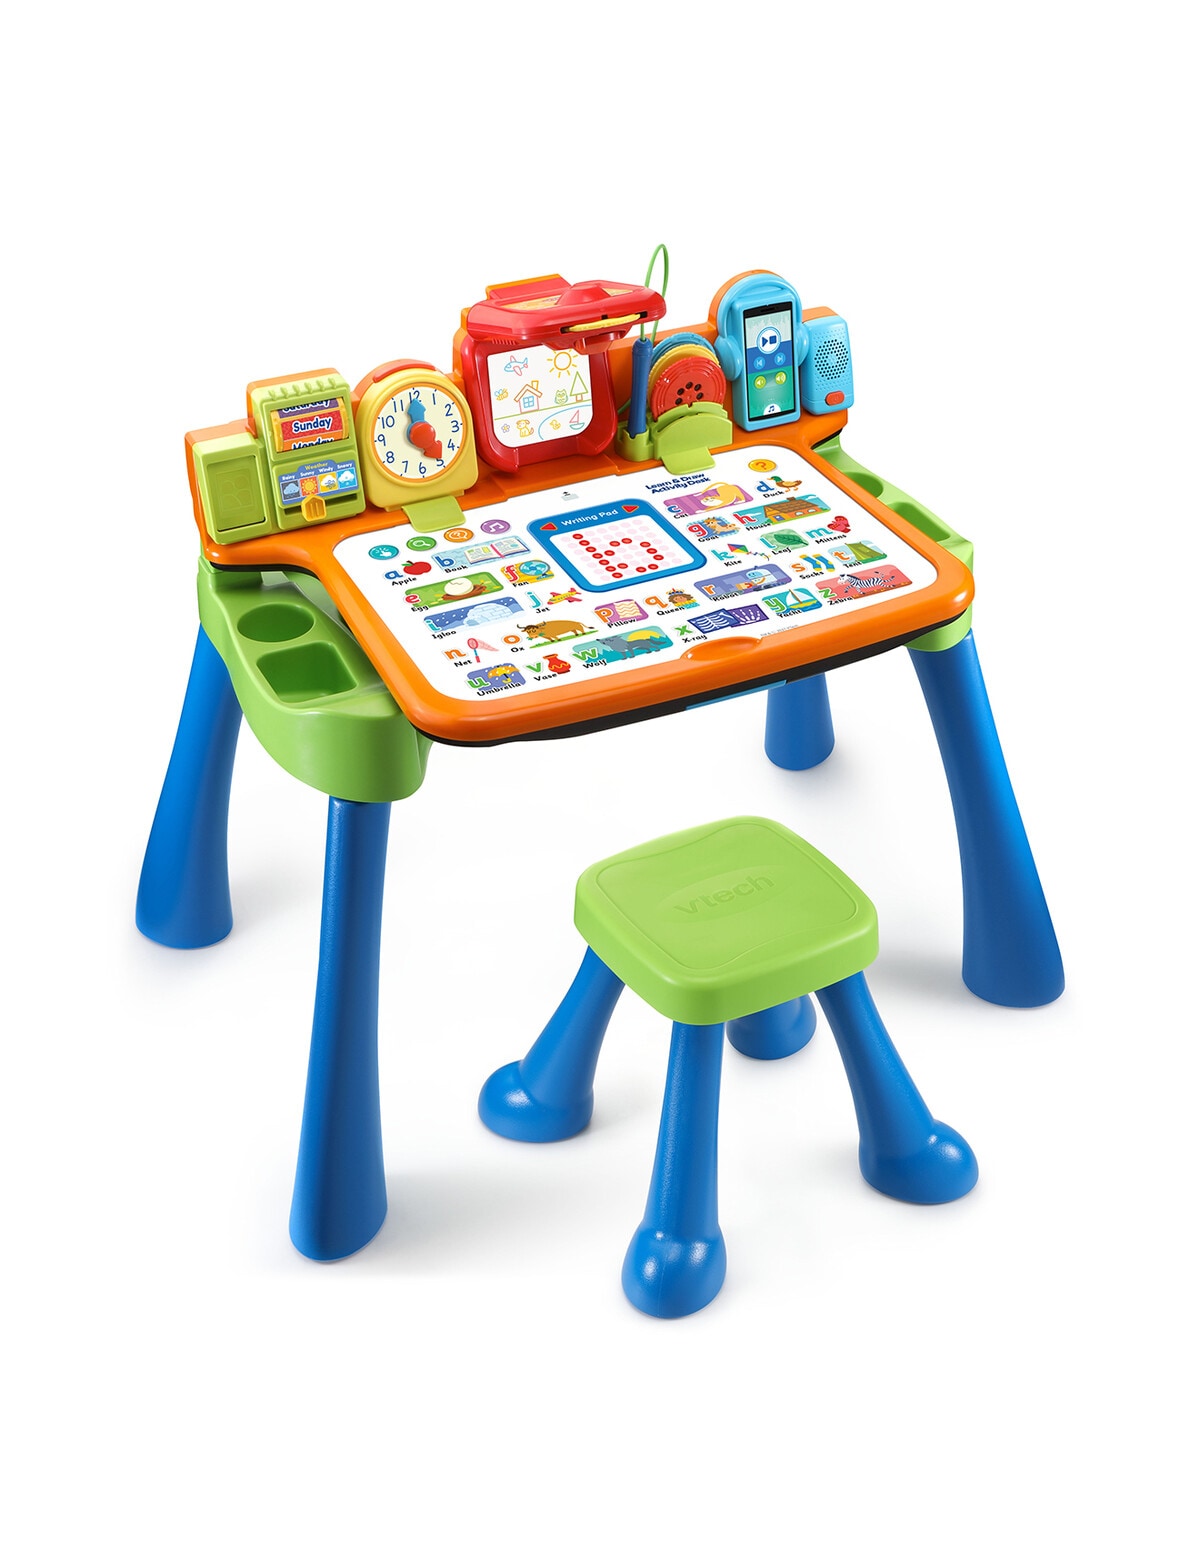 VTech Toys Australia - Electronic Learning Toys - Best Learning Toys - VTech  Australia and New Zealand